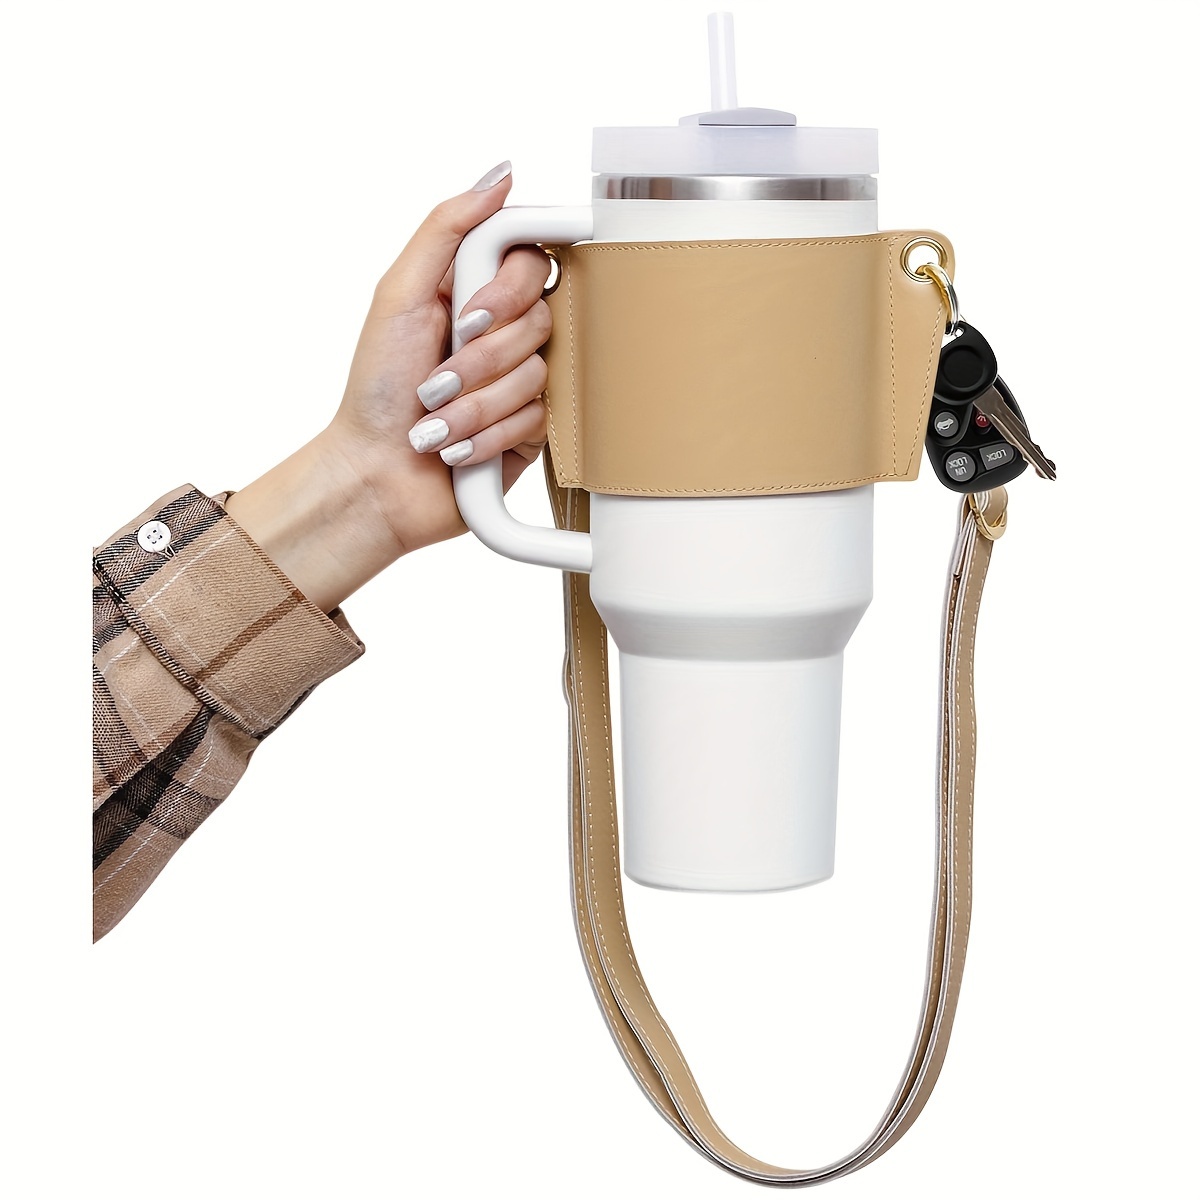 Handwoven Water Bottle Holder with Adjustable Strap – Traveling